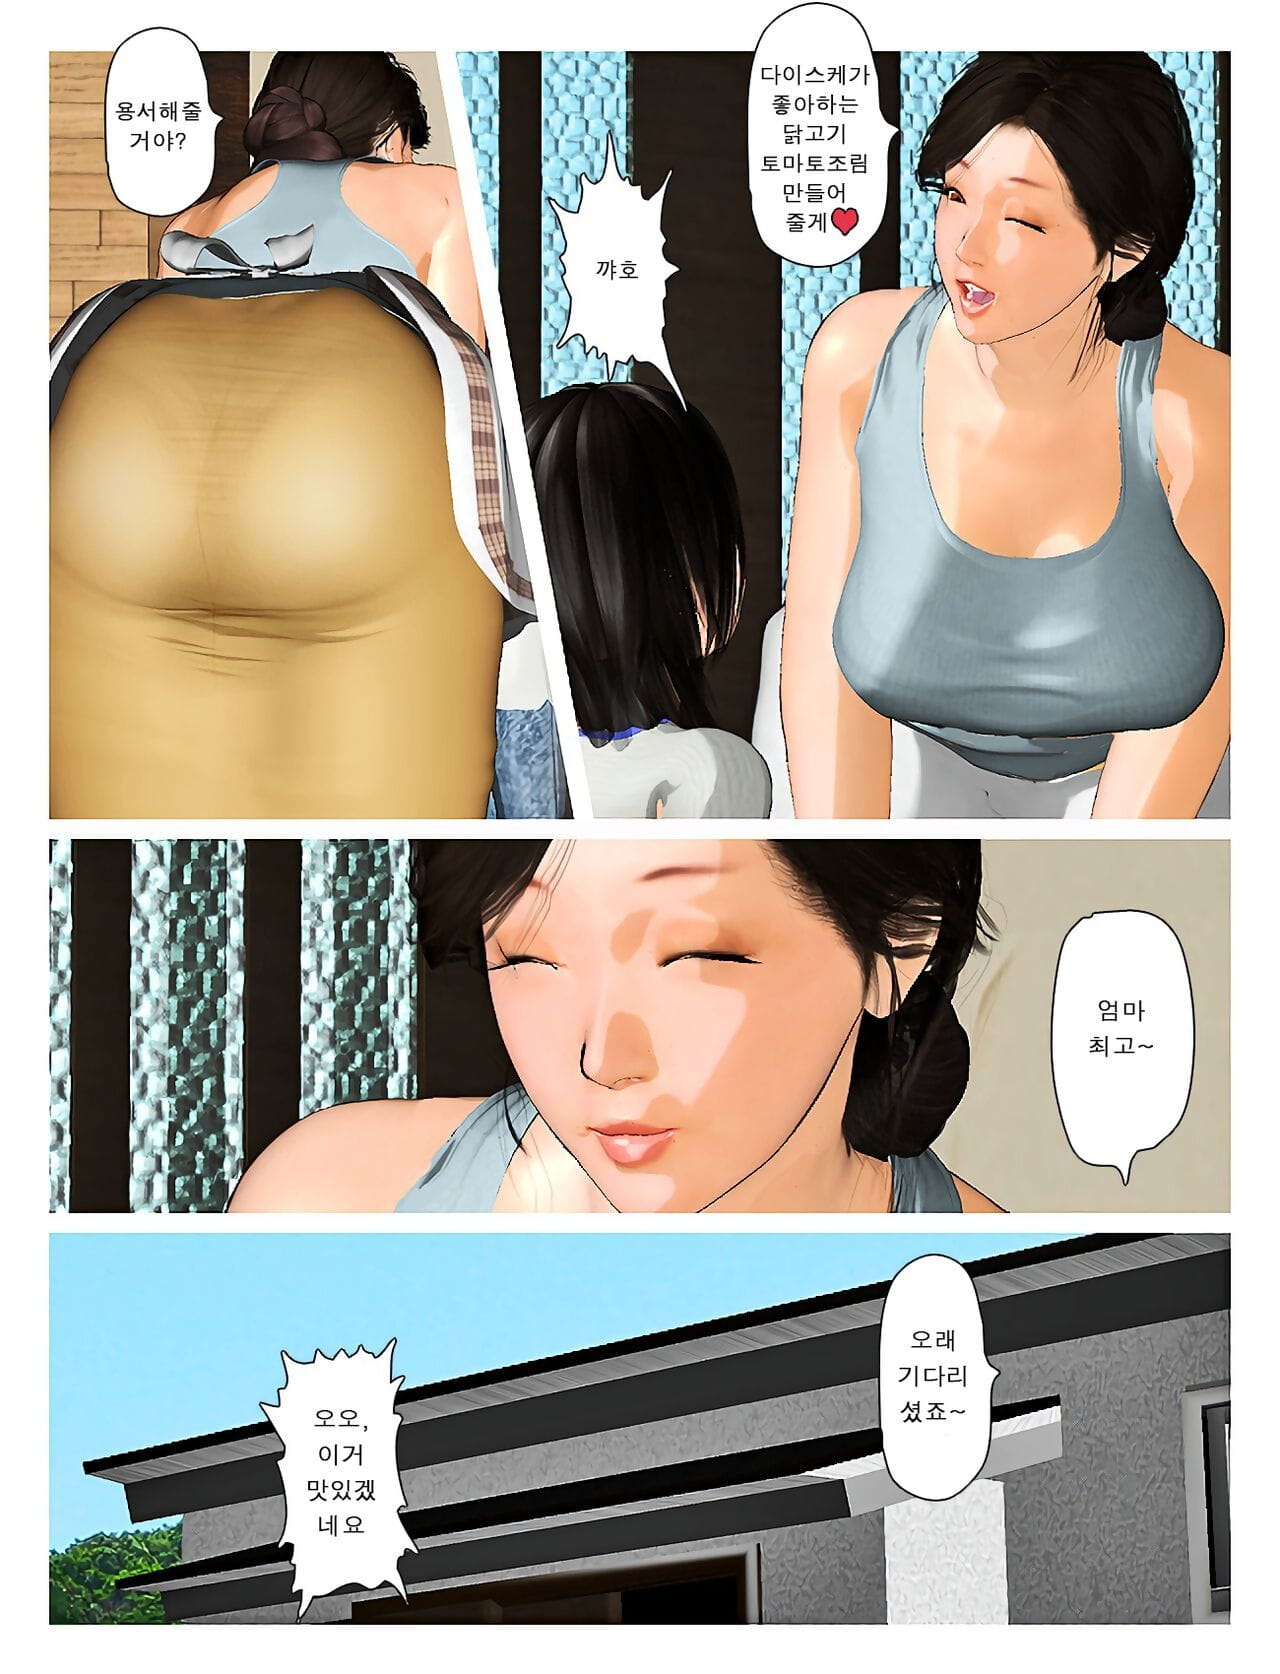 kyou nenhum misako san 2019:3 오늘의 미사코씨 2019:3 page 1